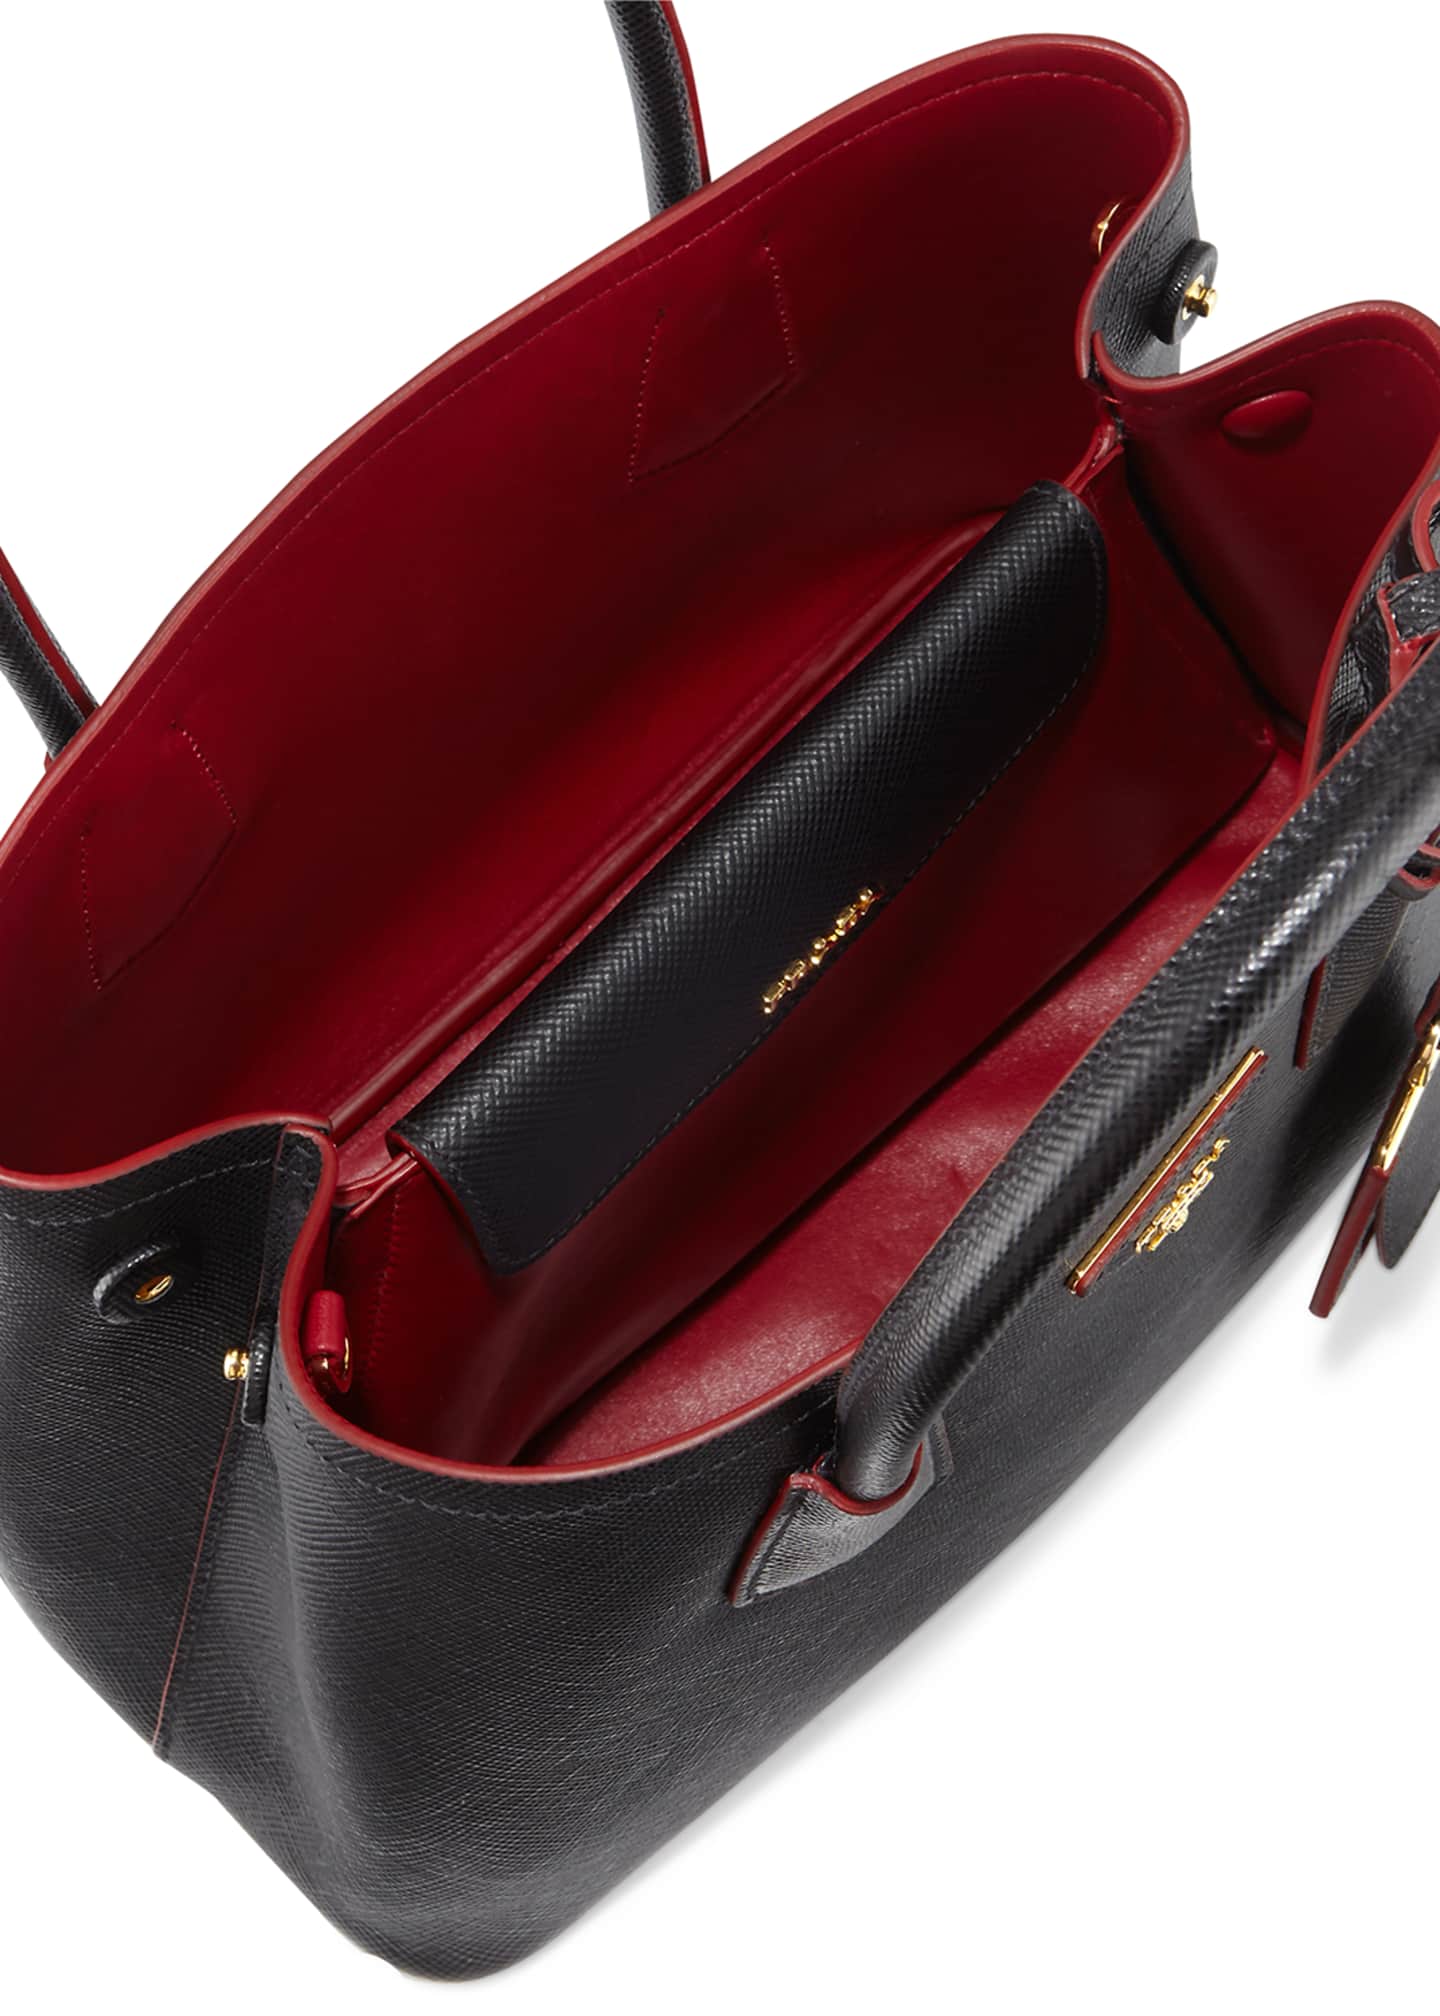 Saffiano Leather Small Double Bag